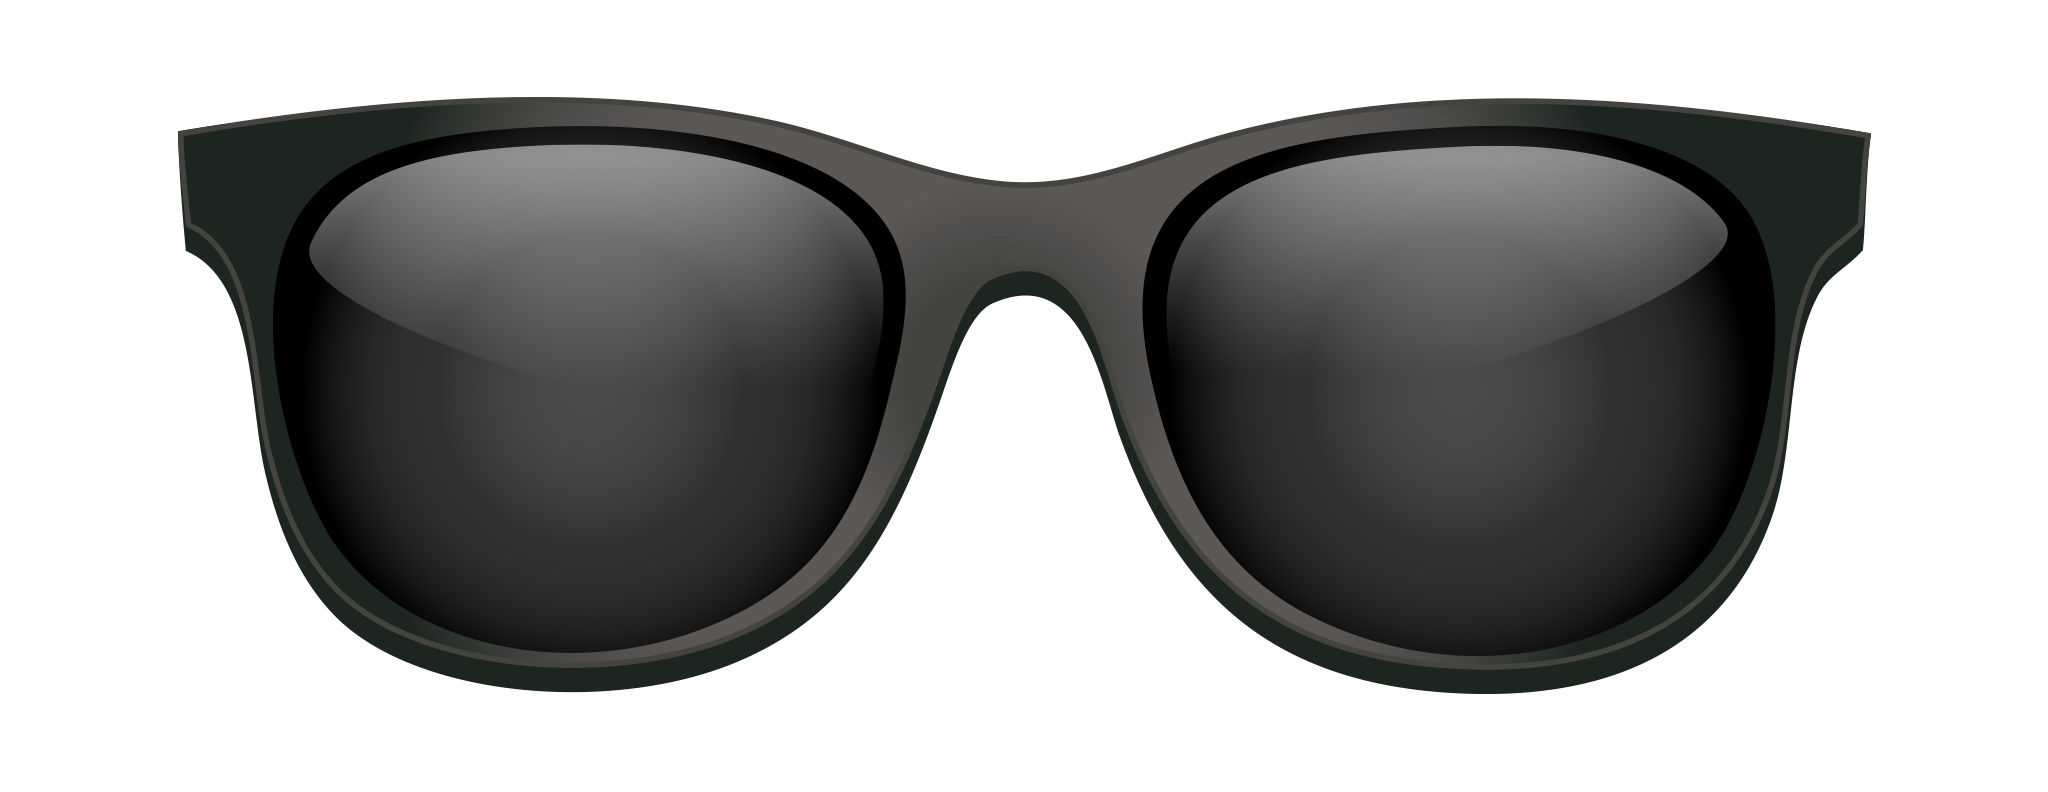 Picart солнцезащитные очки PNG картина